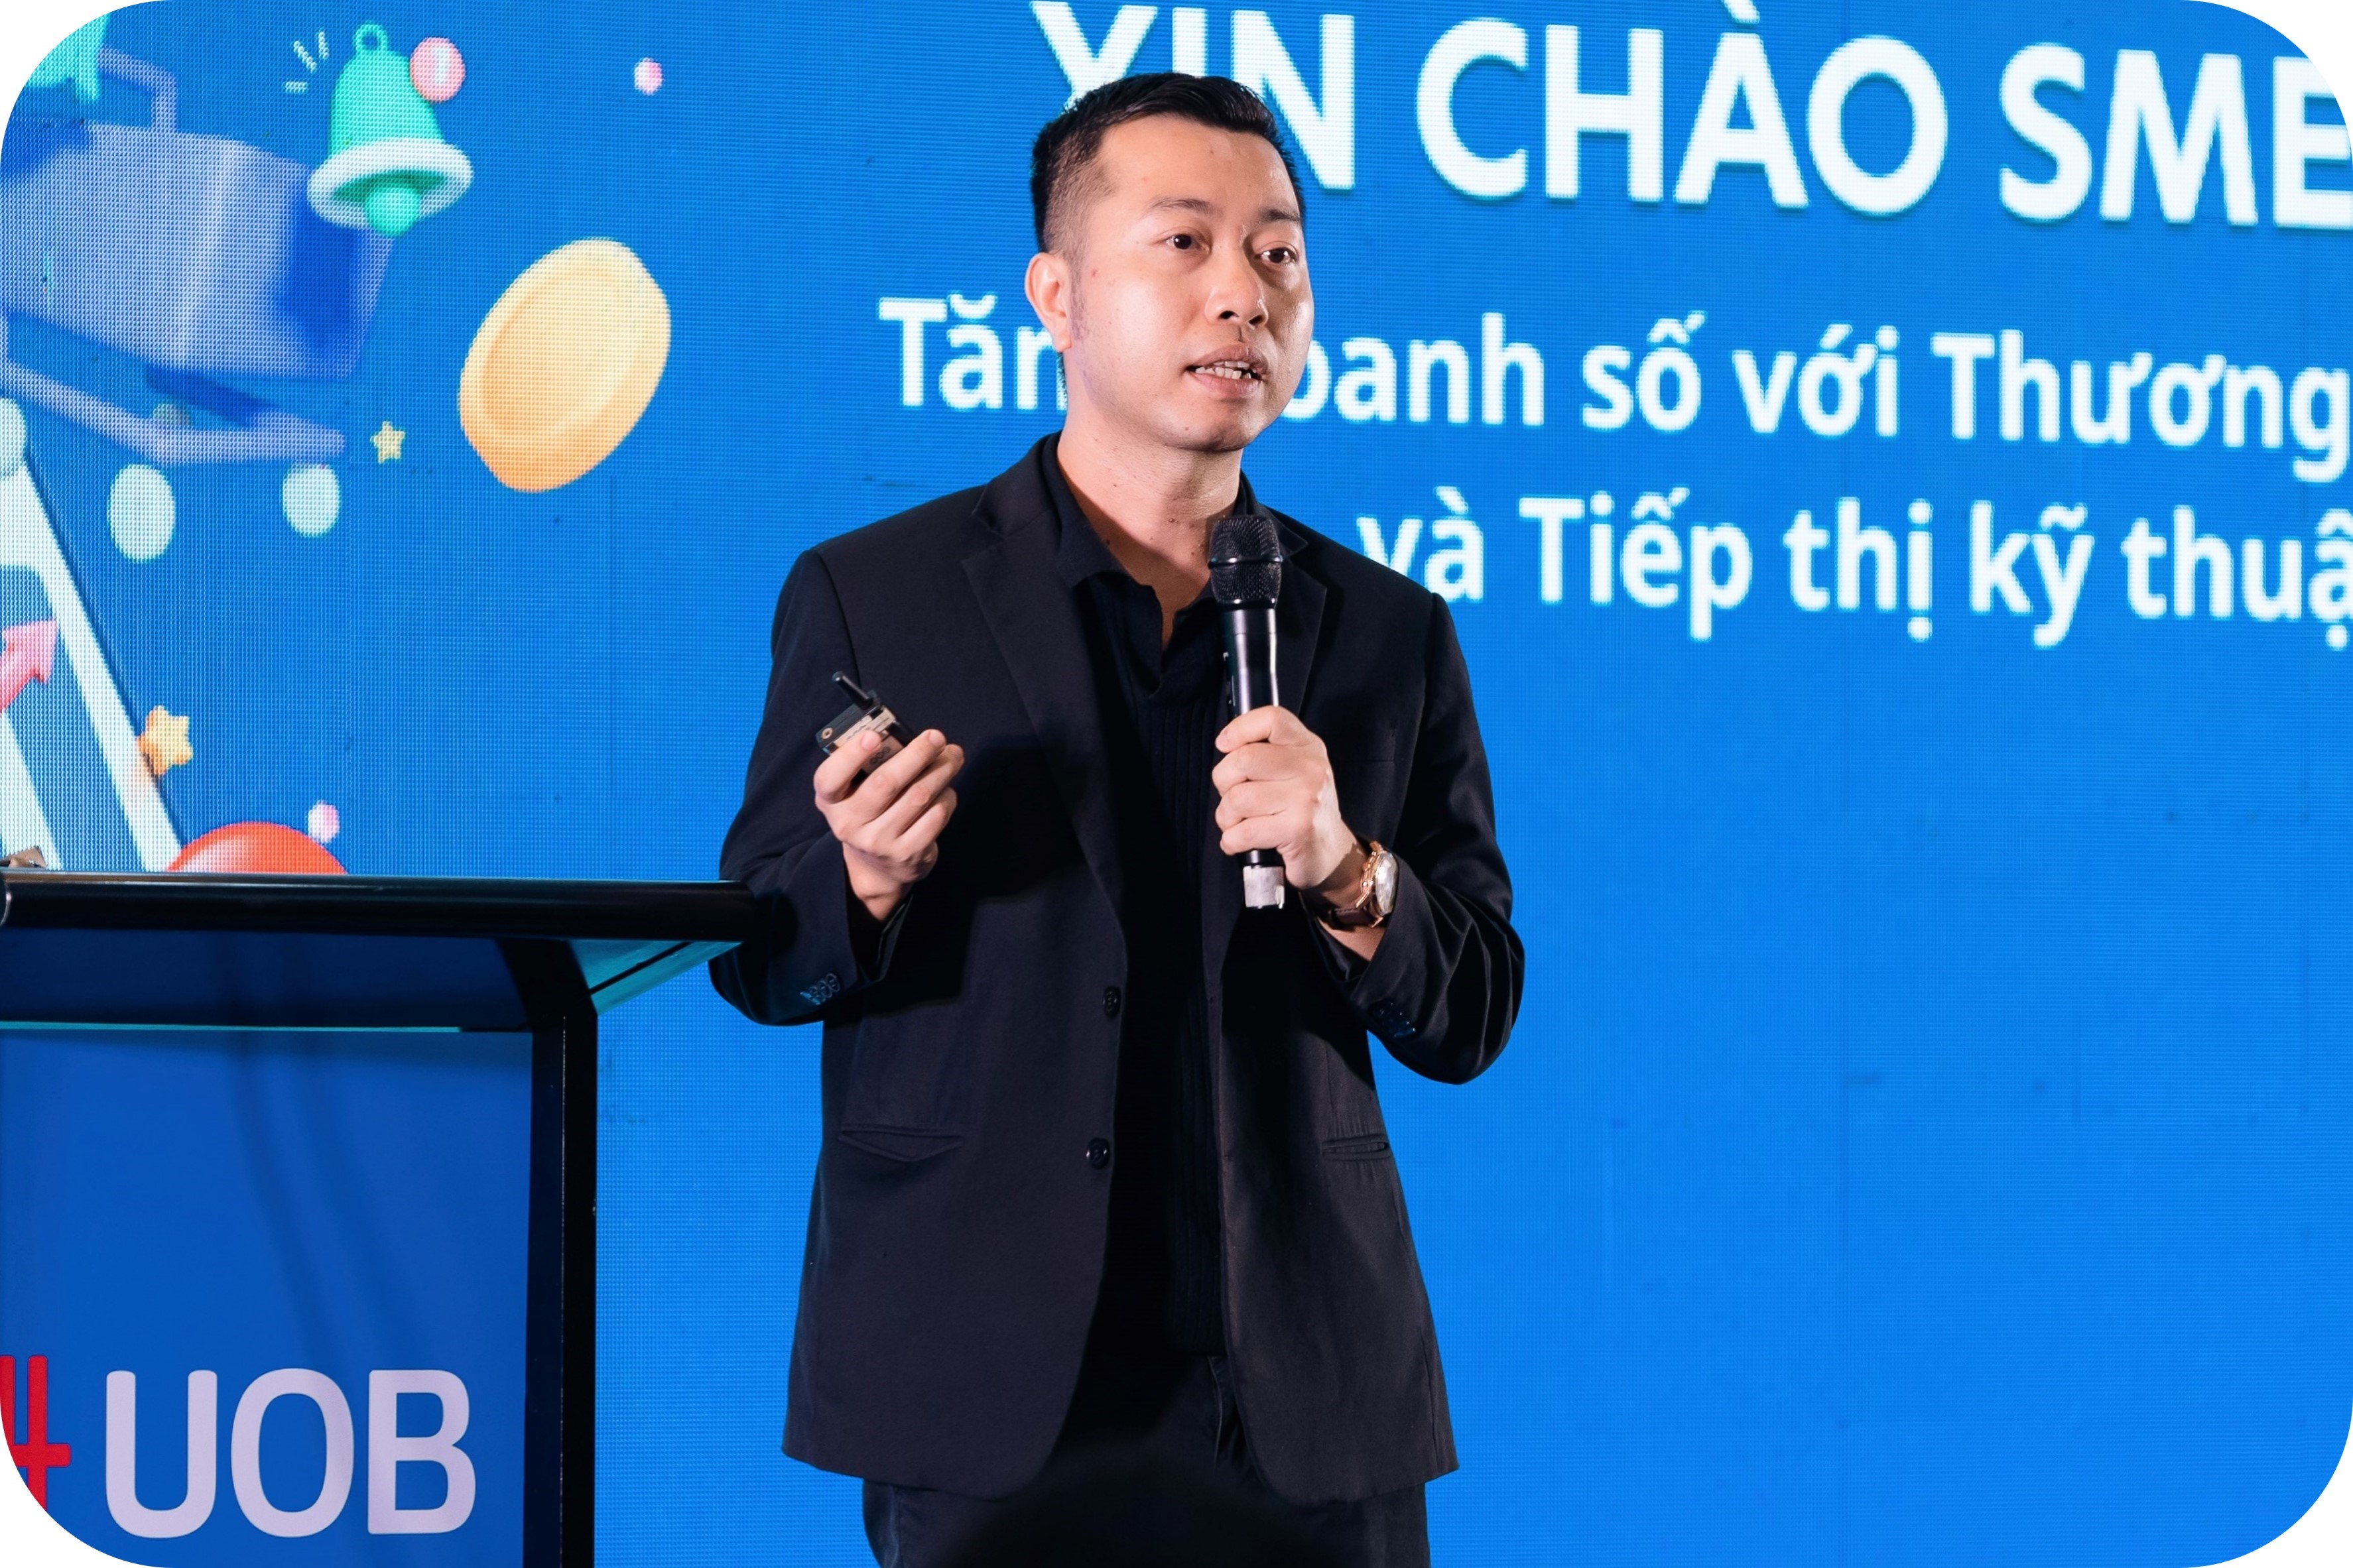 Vecom Nguyen Minh Duc - Xin Chào Smes: Grow Your Sales Through E-Commerce And Digital Marketing 2023 Recap